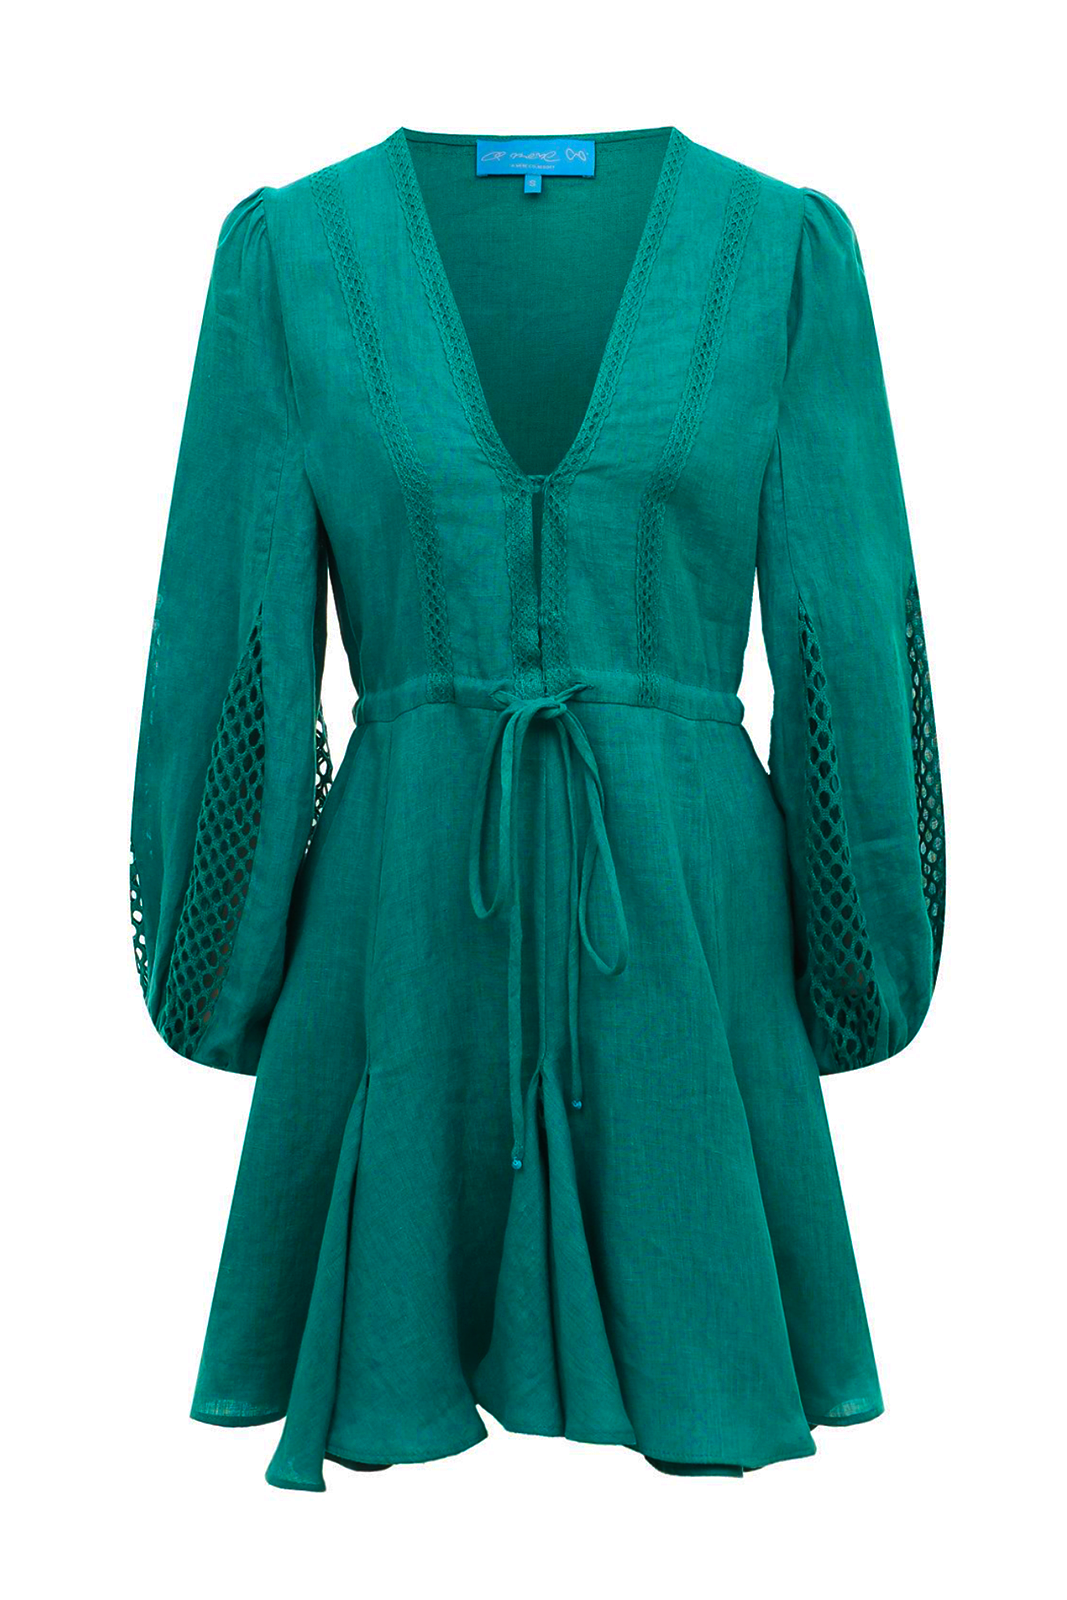 Georgia Mini Dress - A-MERE-CO| Official Online Shop | Womenswear